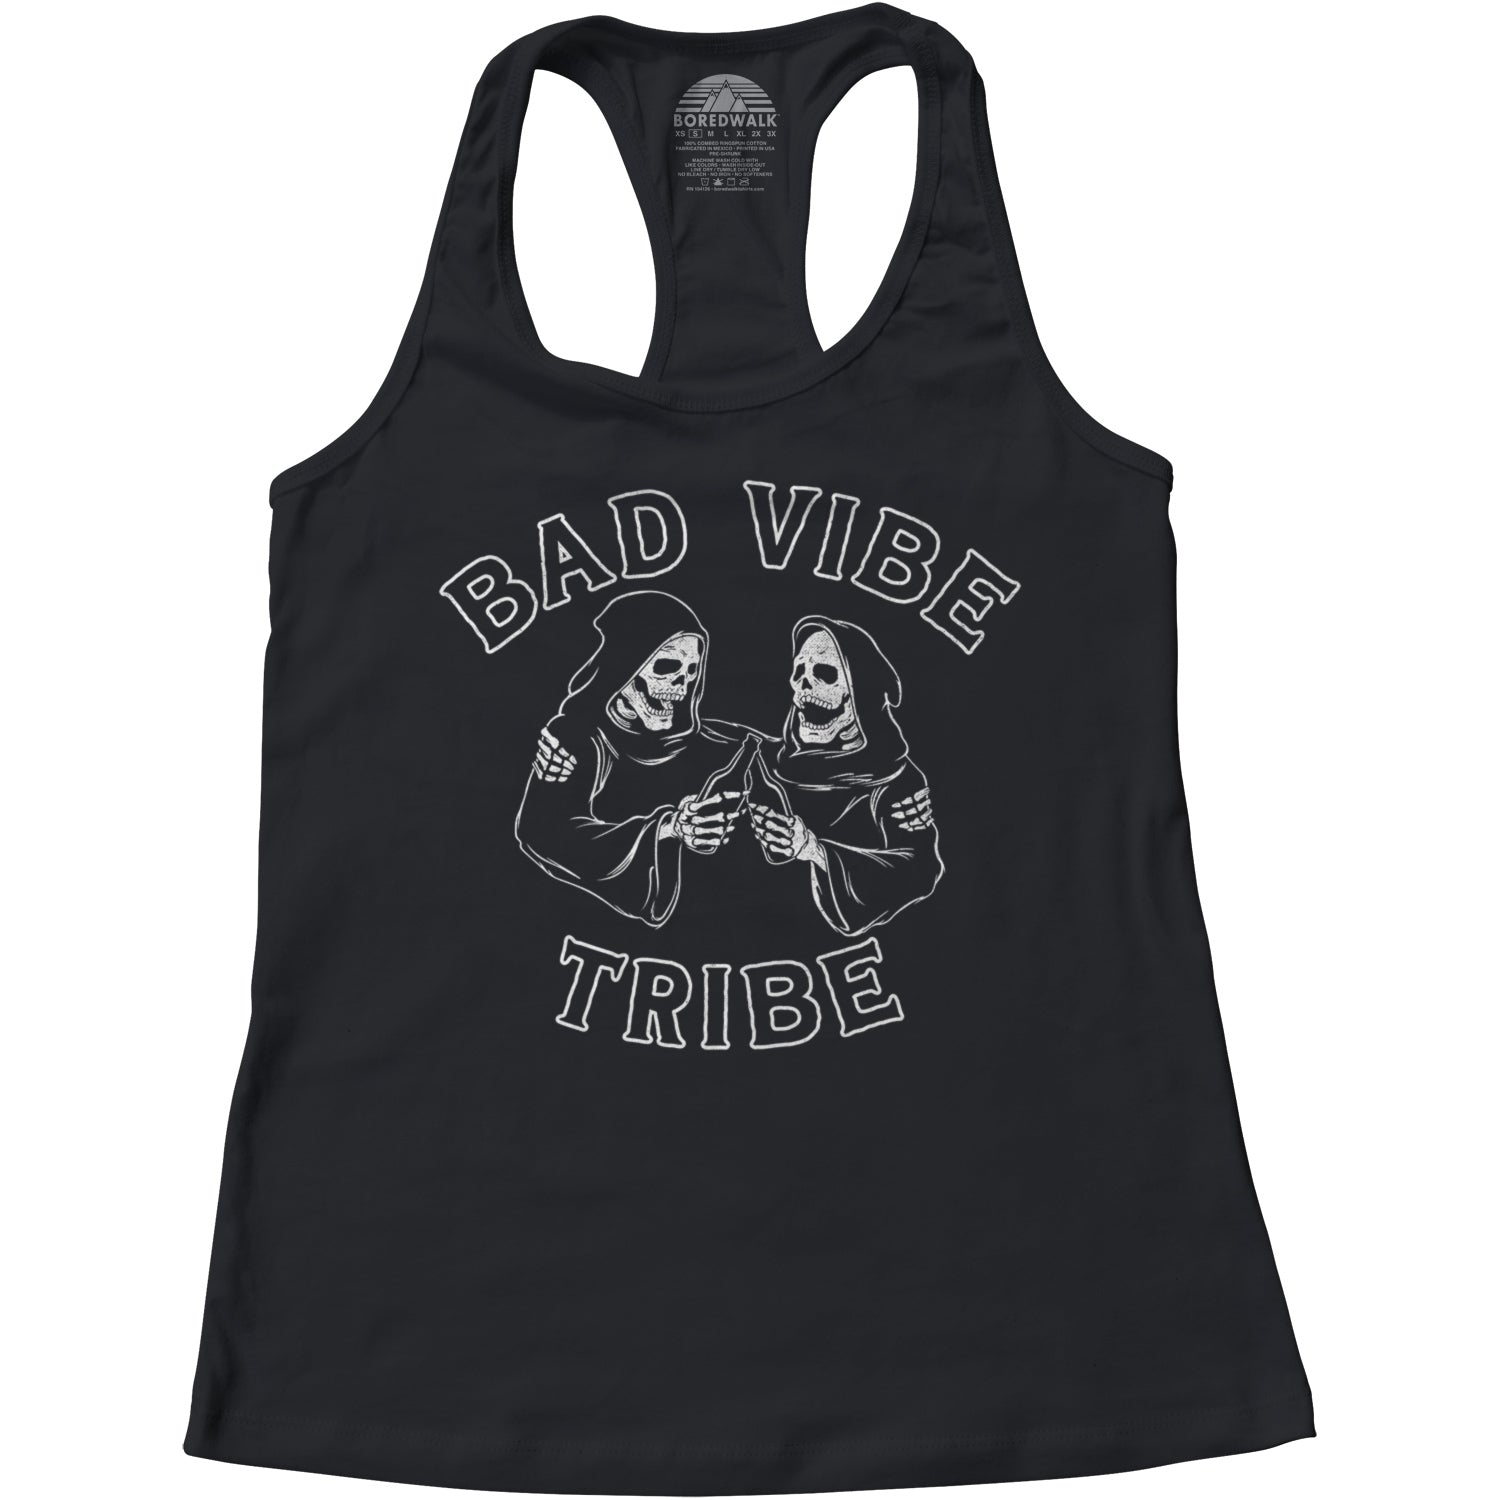 Women's Bad Vibe Tribe Racerback Tank Top